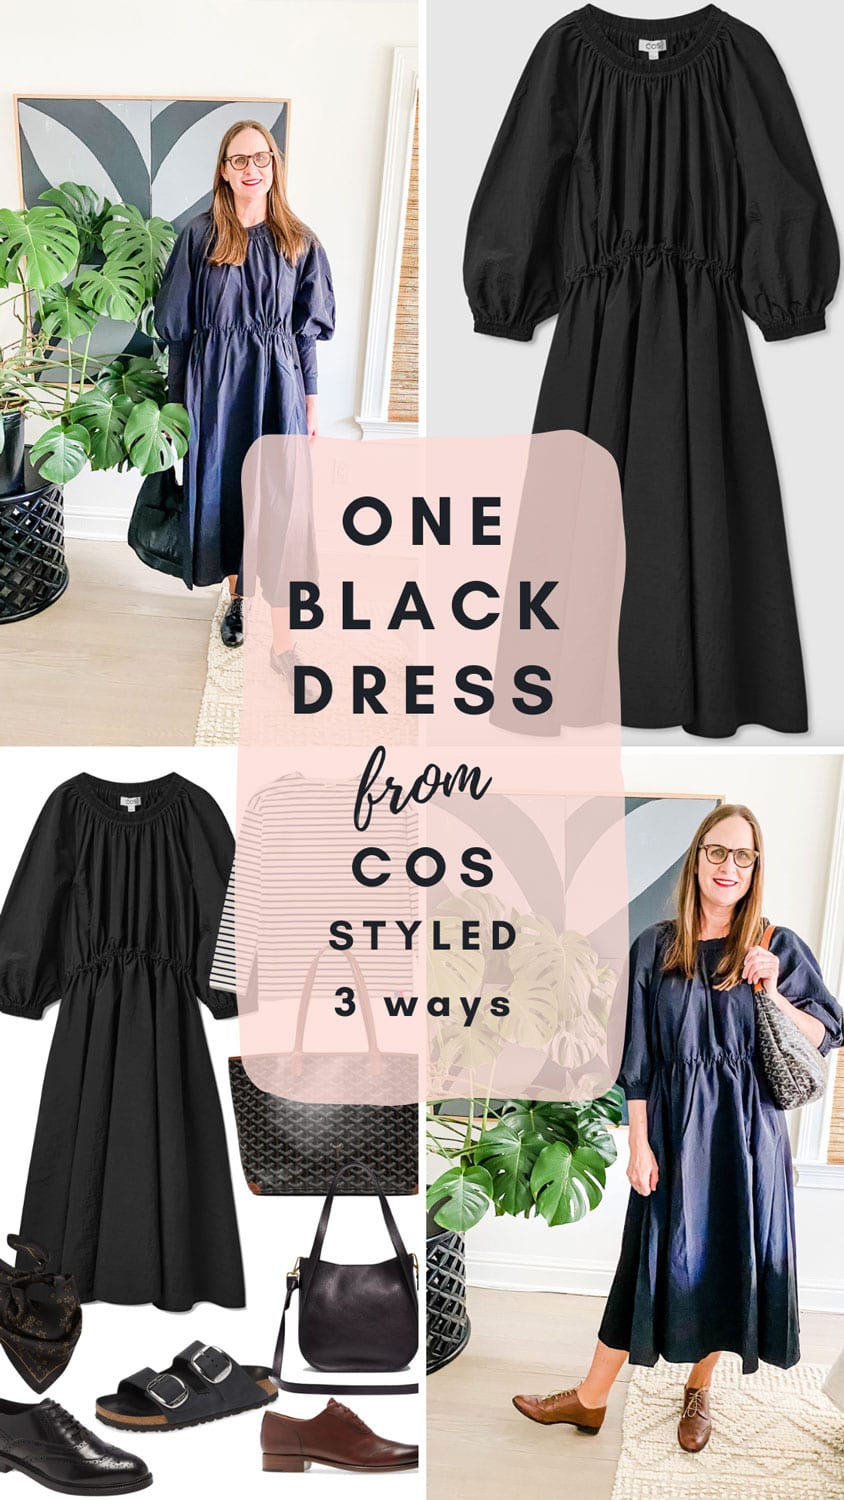 Cos Black Dress 3 Ways